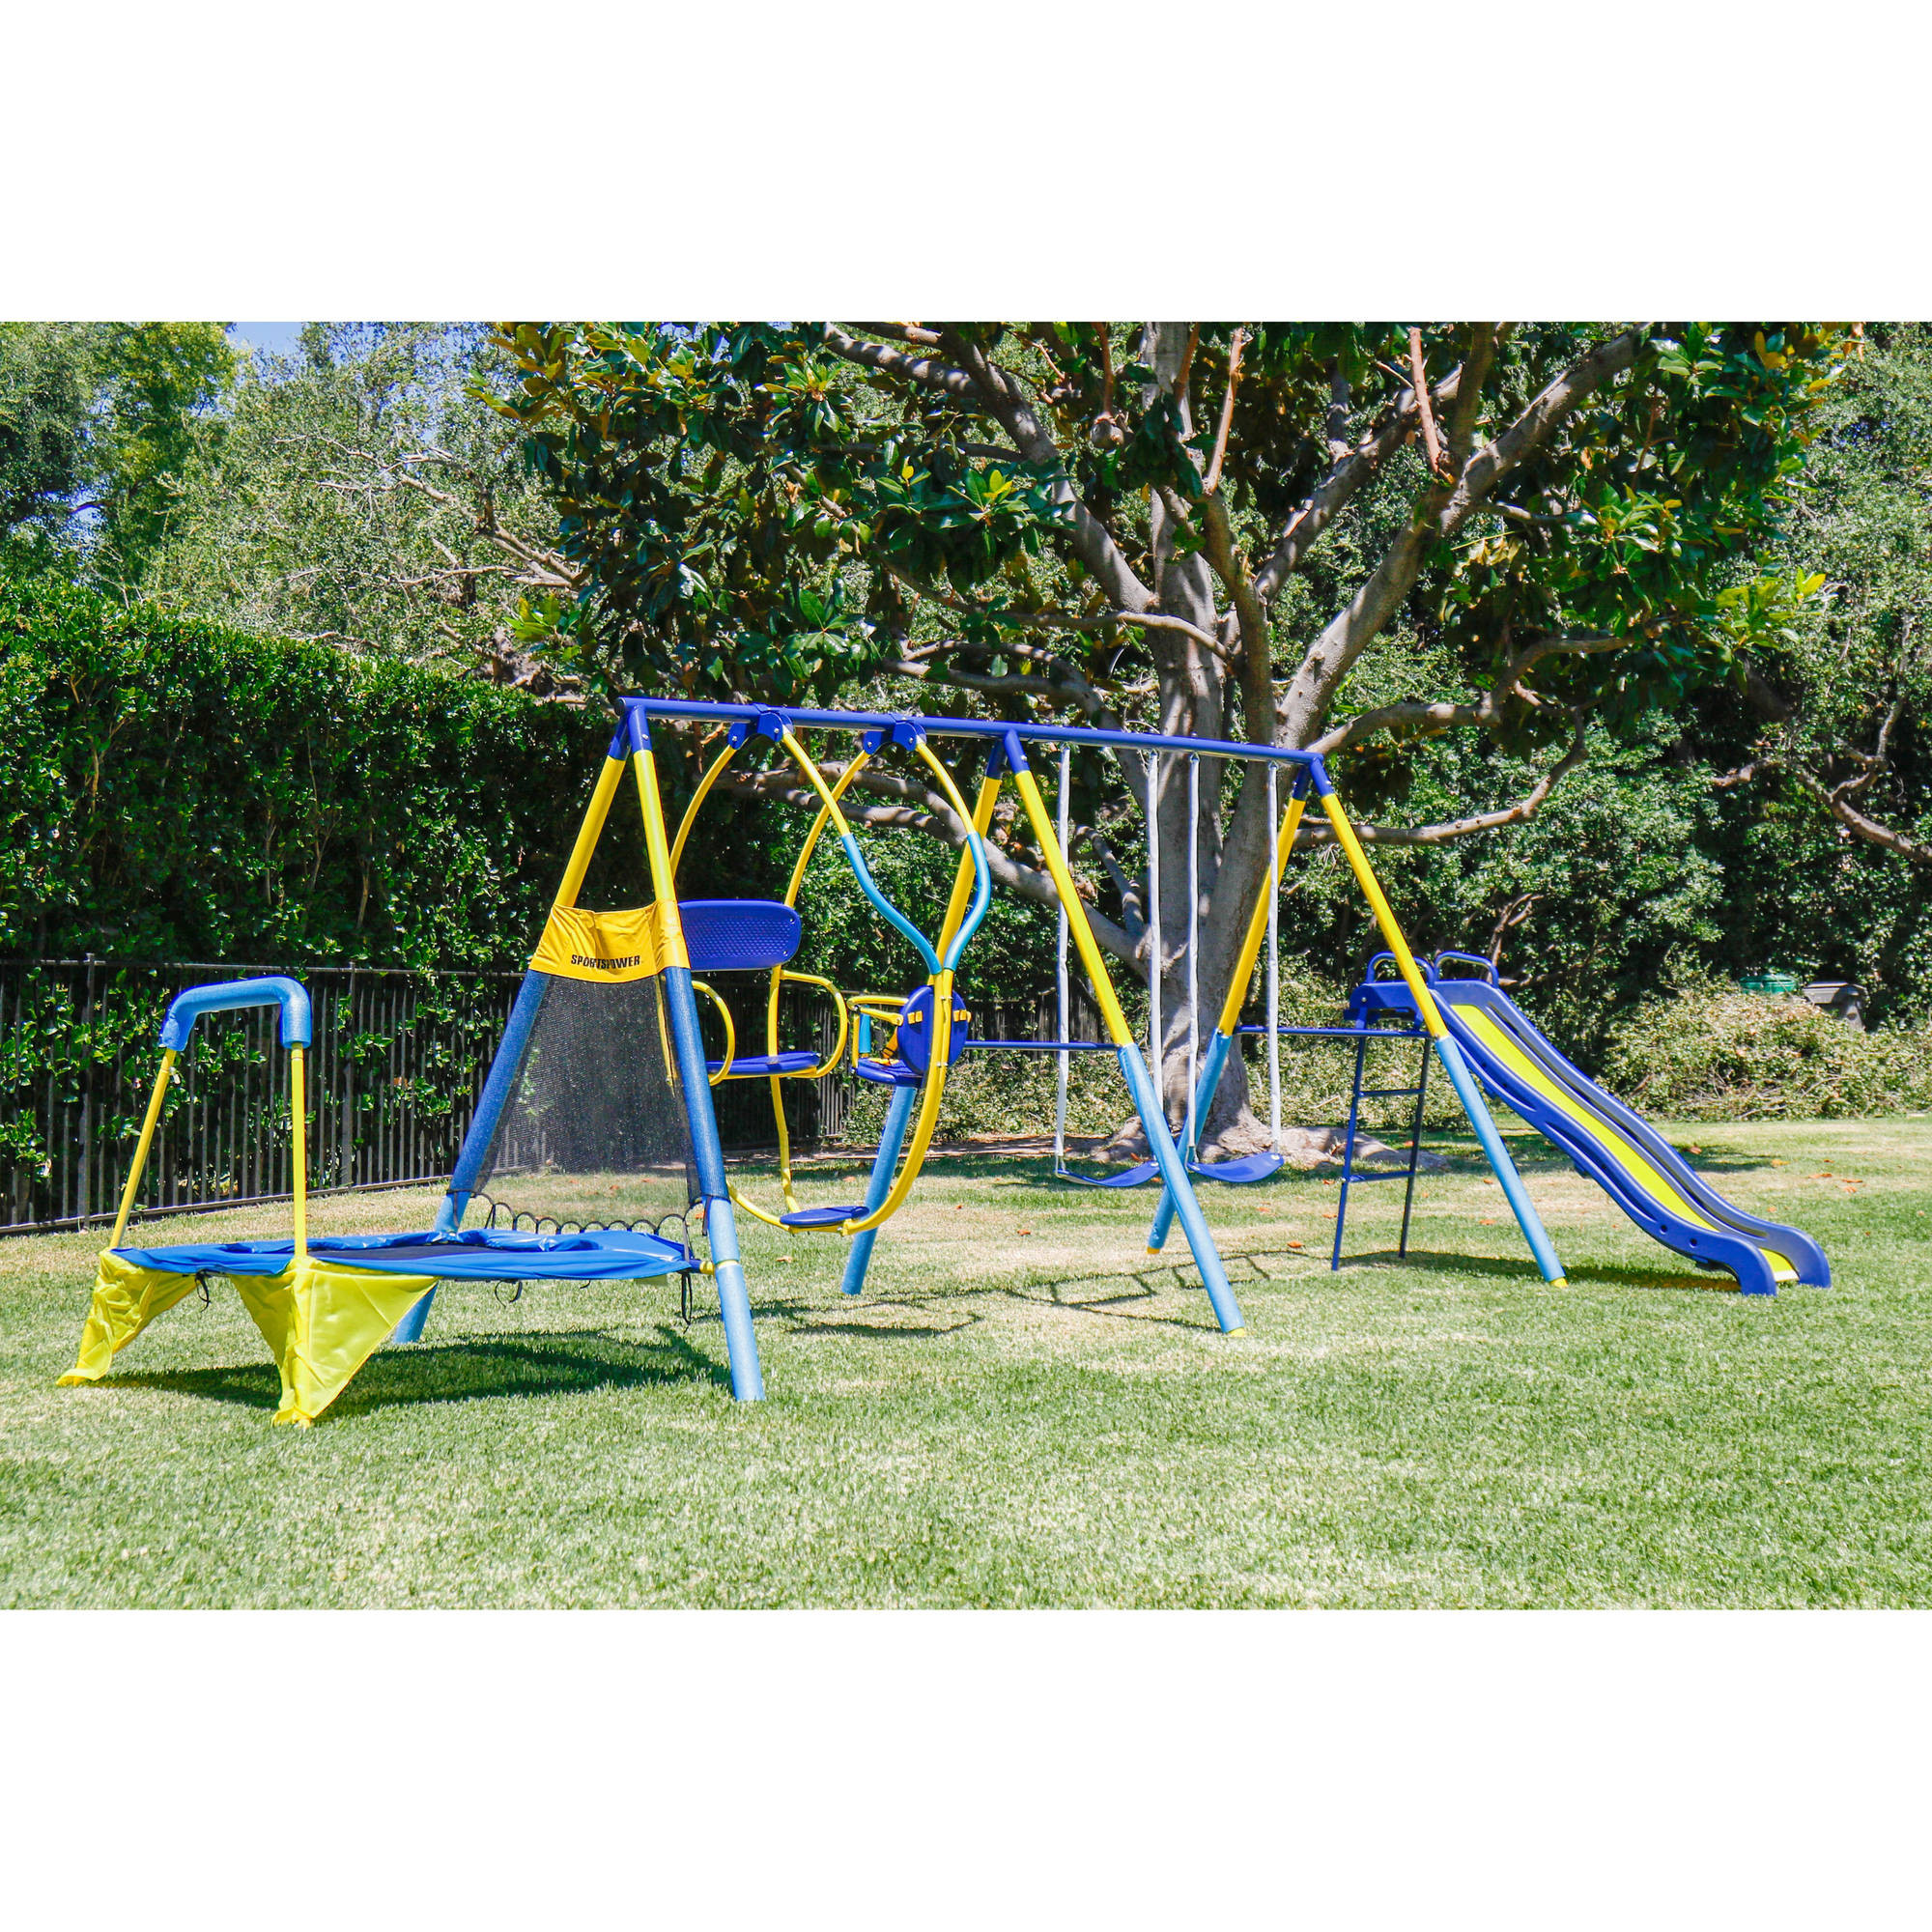 Backyard Swing For Kids
 Kids Playground Set Outdoor Swing Slide w Trampoline